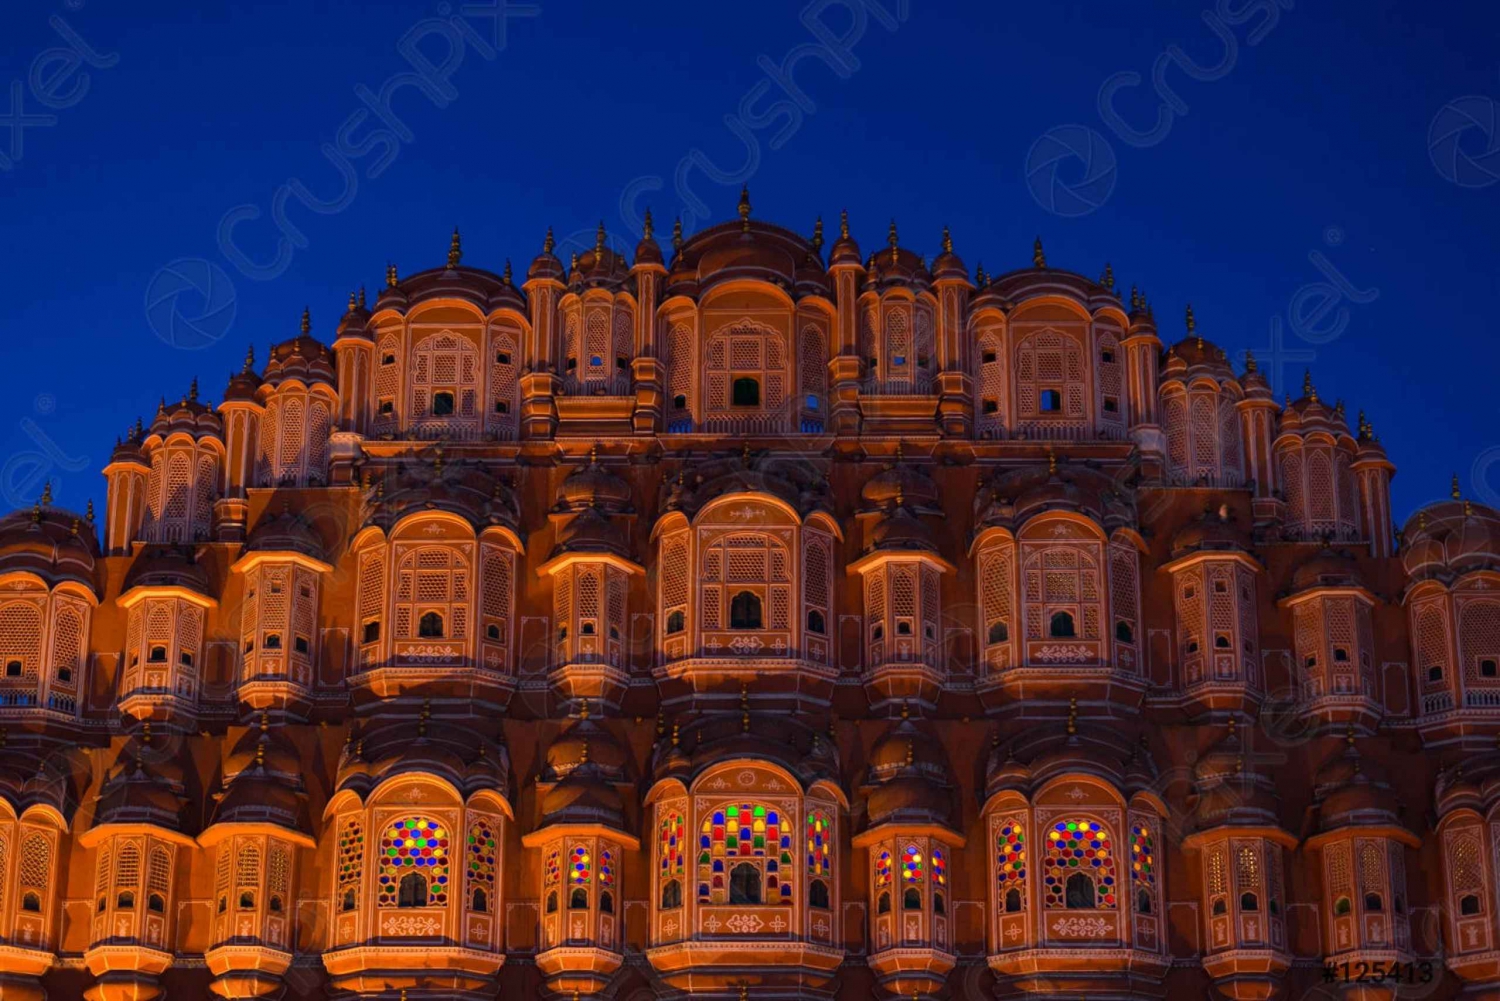 Incredible India 3 Days Tour including: Delhi, Agra & Jaipur